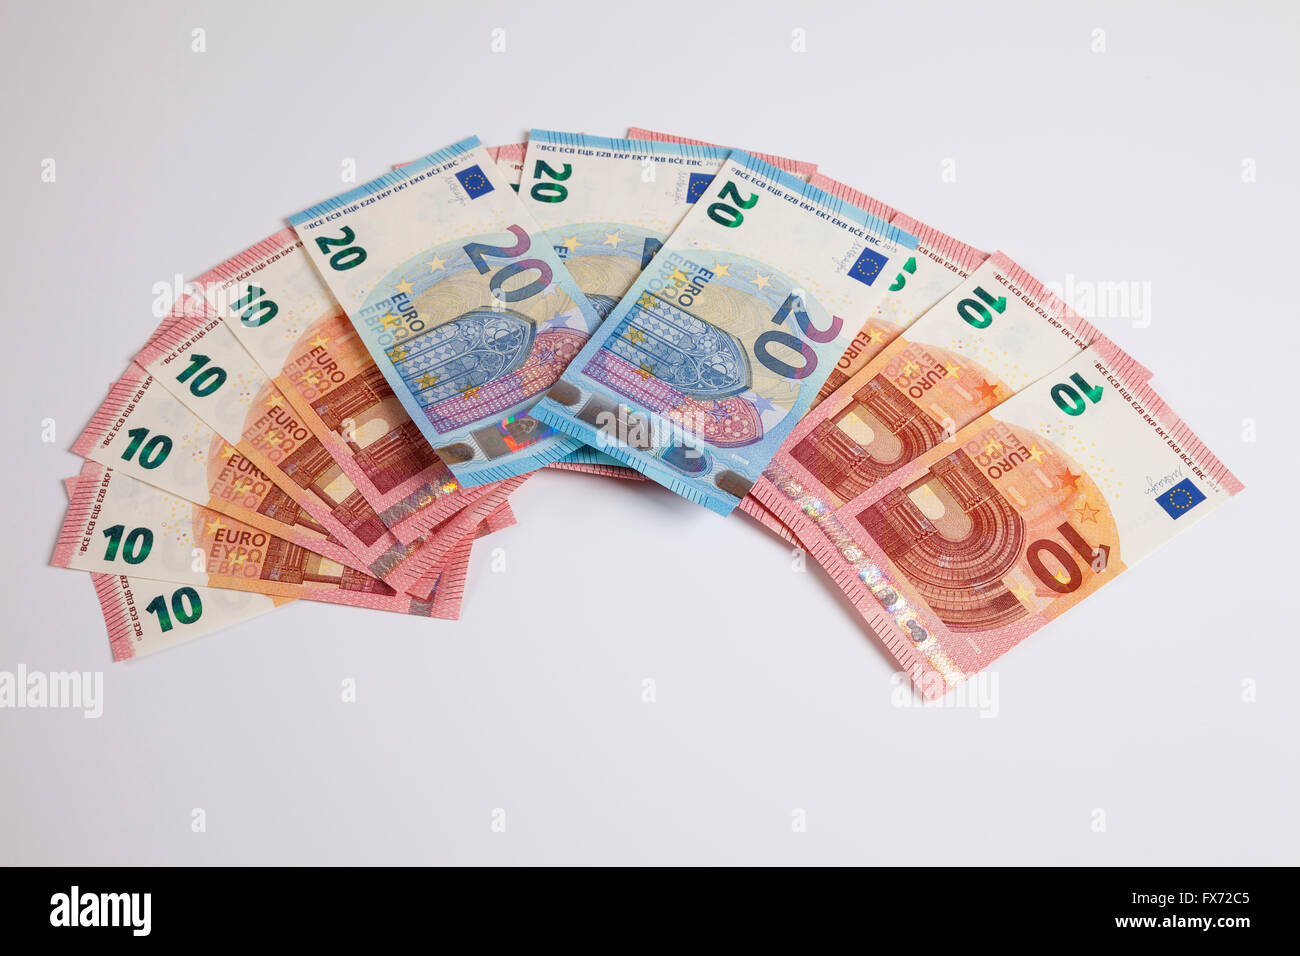 Fan de billetes de banco, veinte euros, fecha de publicación 25/11/2015, 10 Euros, fecha de publicación 23/09/2014 Foto de stock